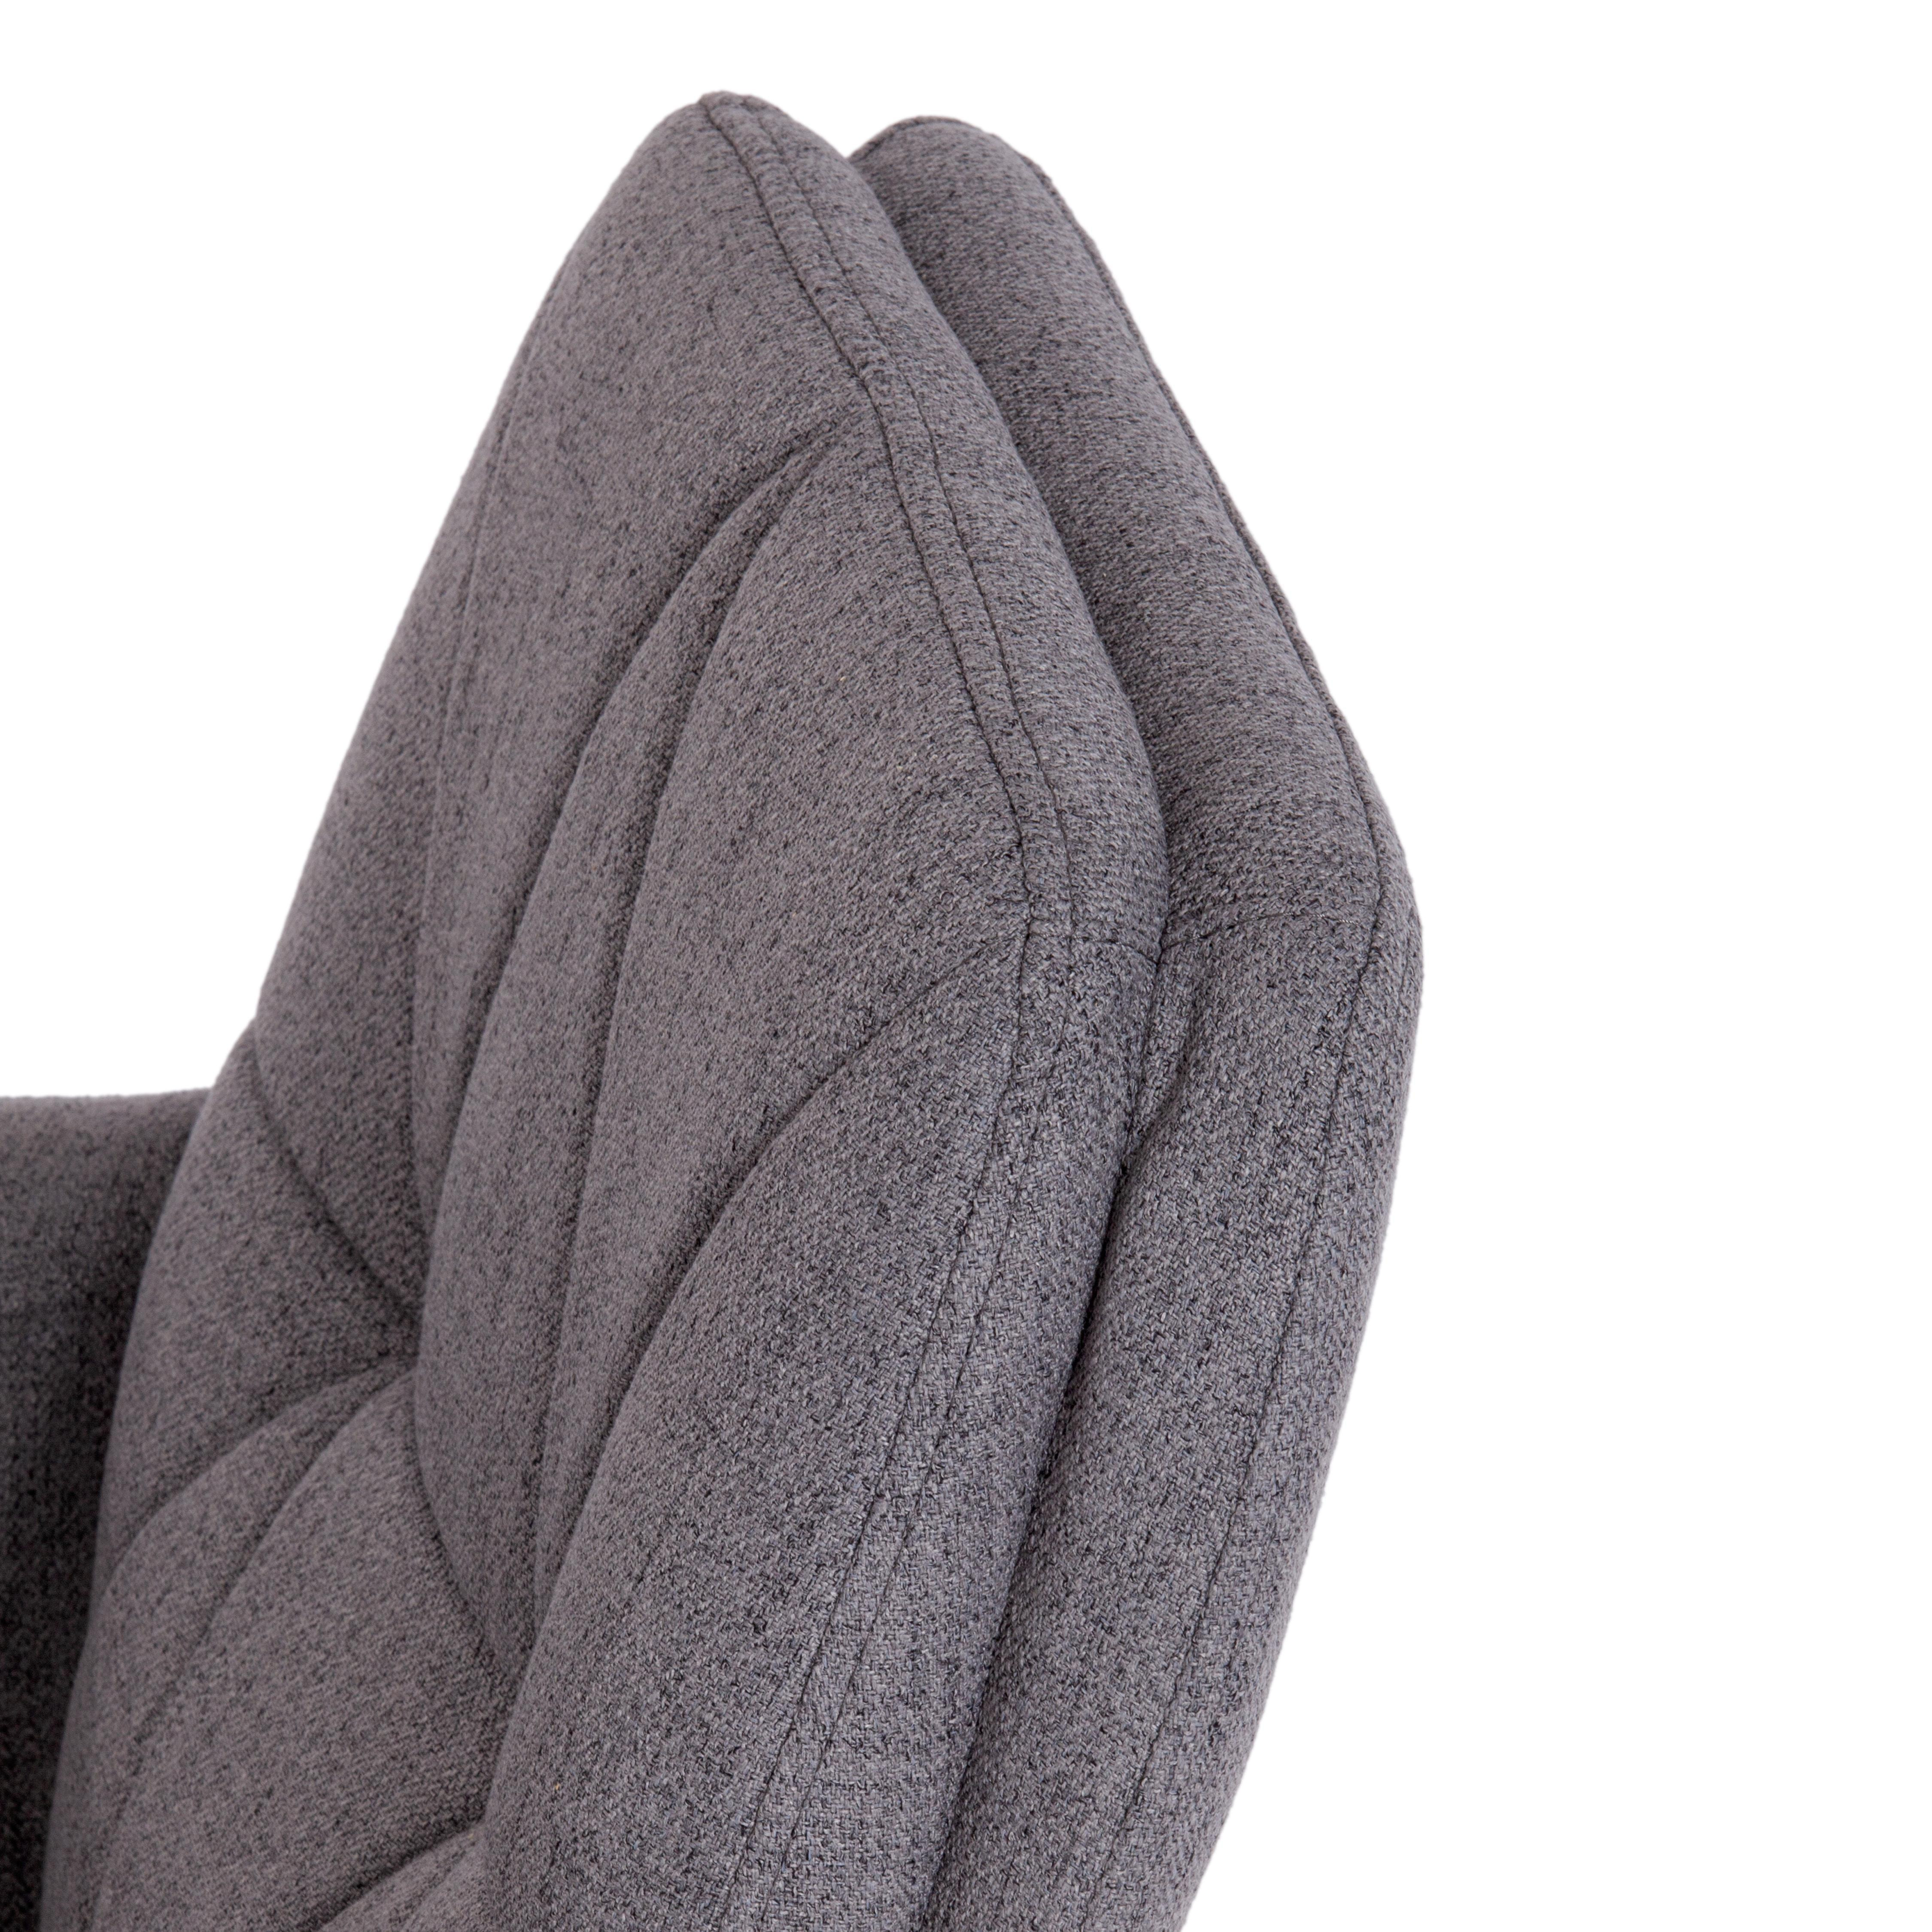 Кресло GARDA ткань, серый, фостер 19